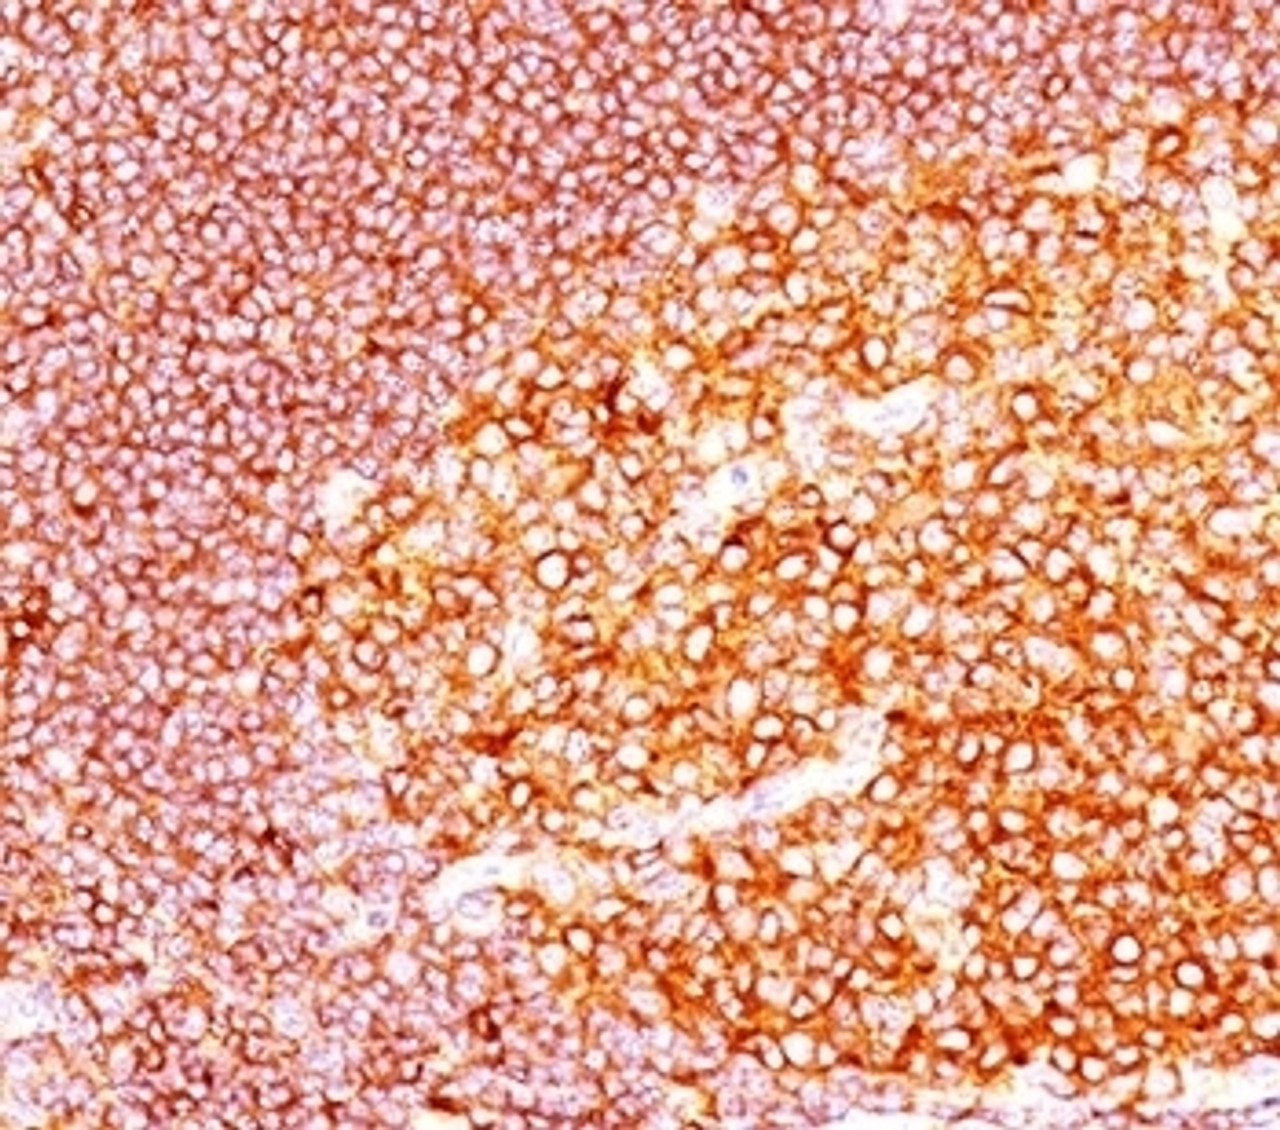 IHC staining of tonsil tissue with MALT1 antibody (MT1/410) .